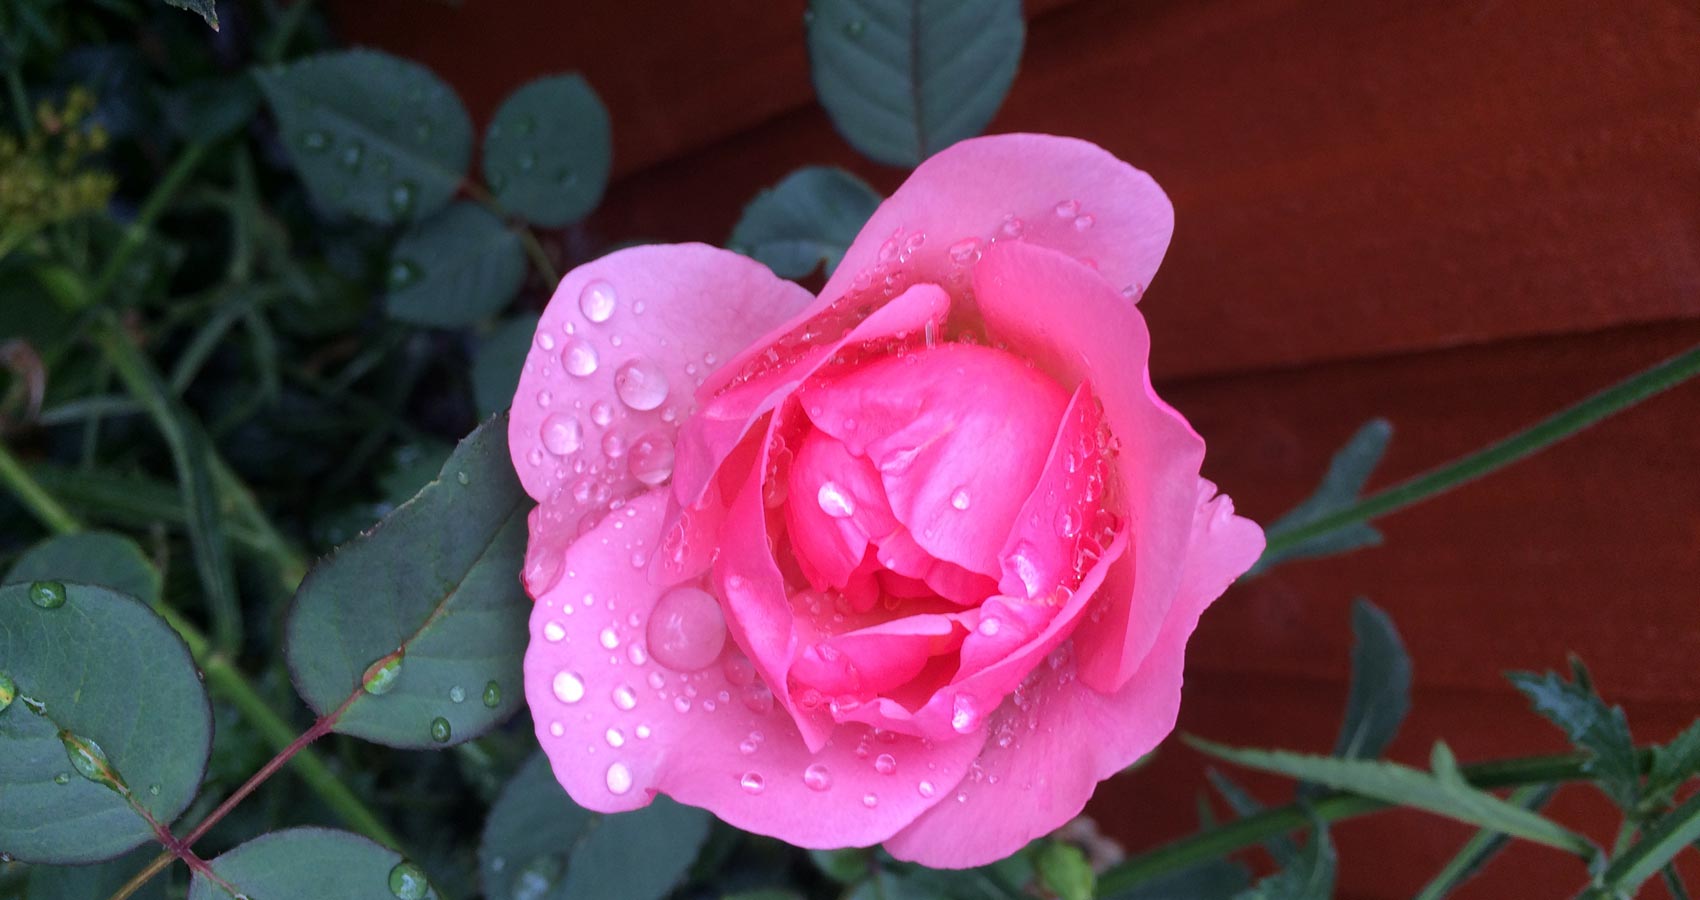 The Pink Rose, a poem by Prafulla Vyas at Spillwords.com